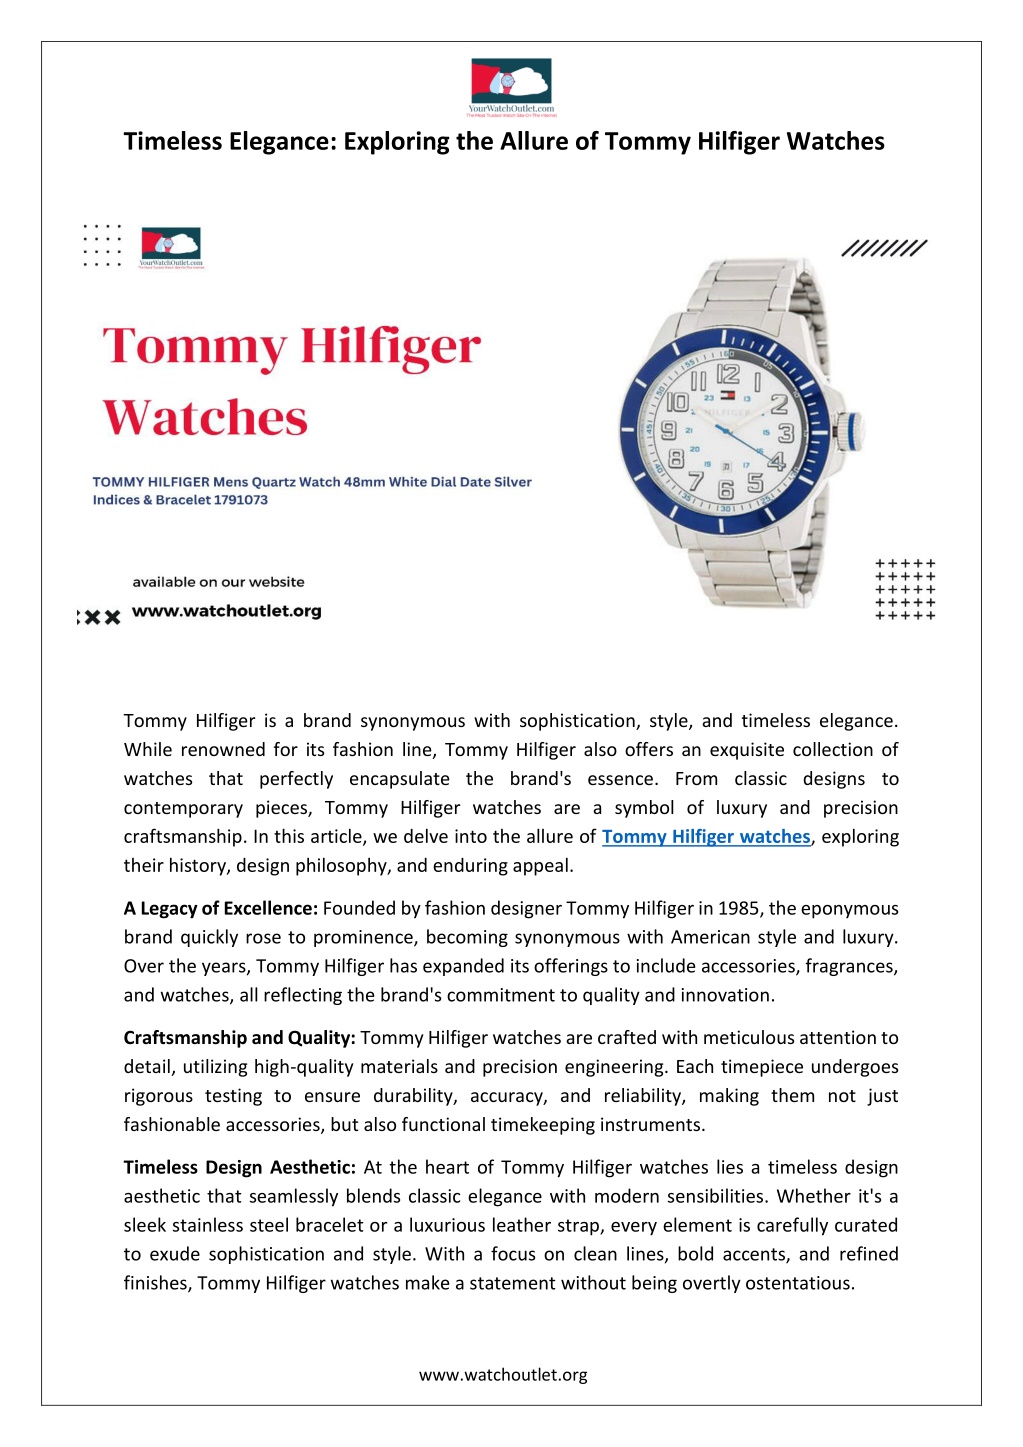 PPT - Timeless Elegance - Exploring the Allure of Tommy Hilfiger ...